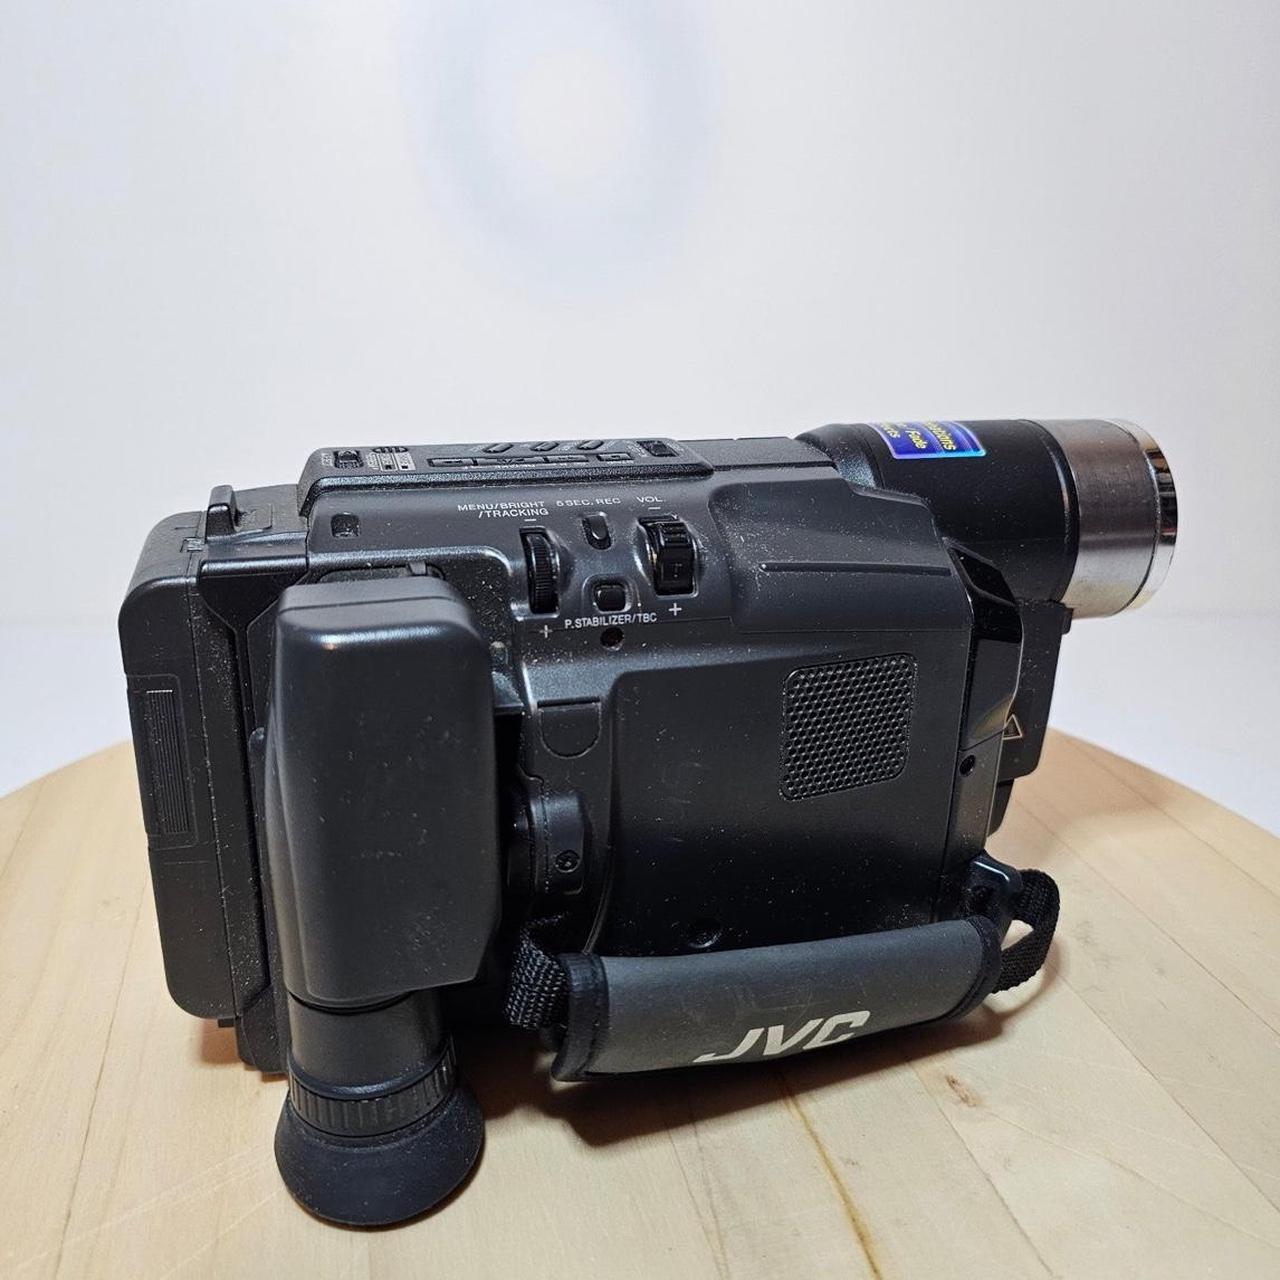 JVC GR-SXM240U Compact Super VHS Camcorder AS-IS/... - Depop